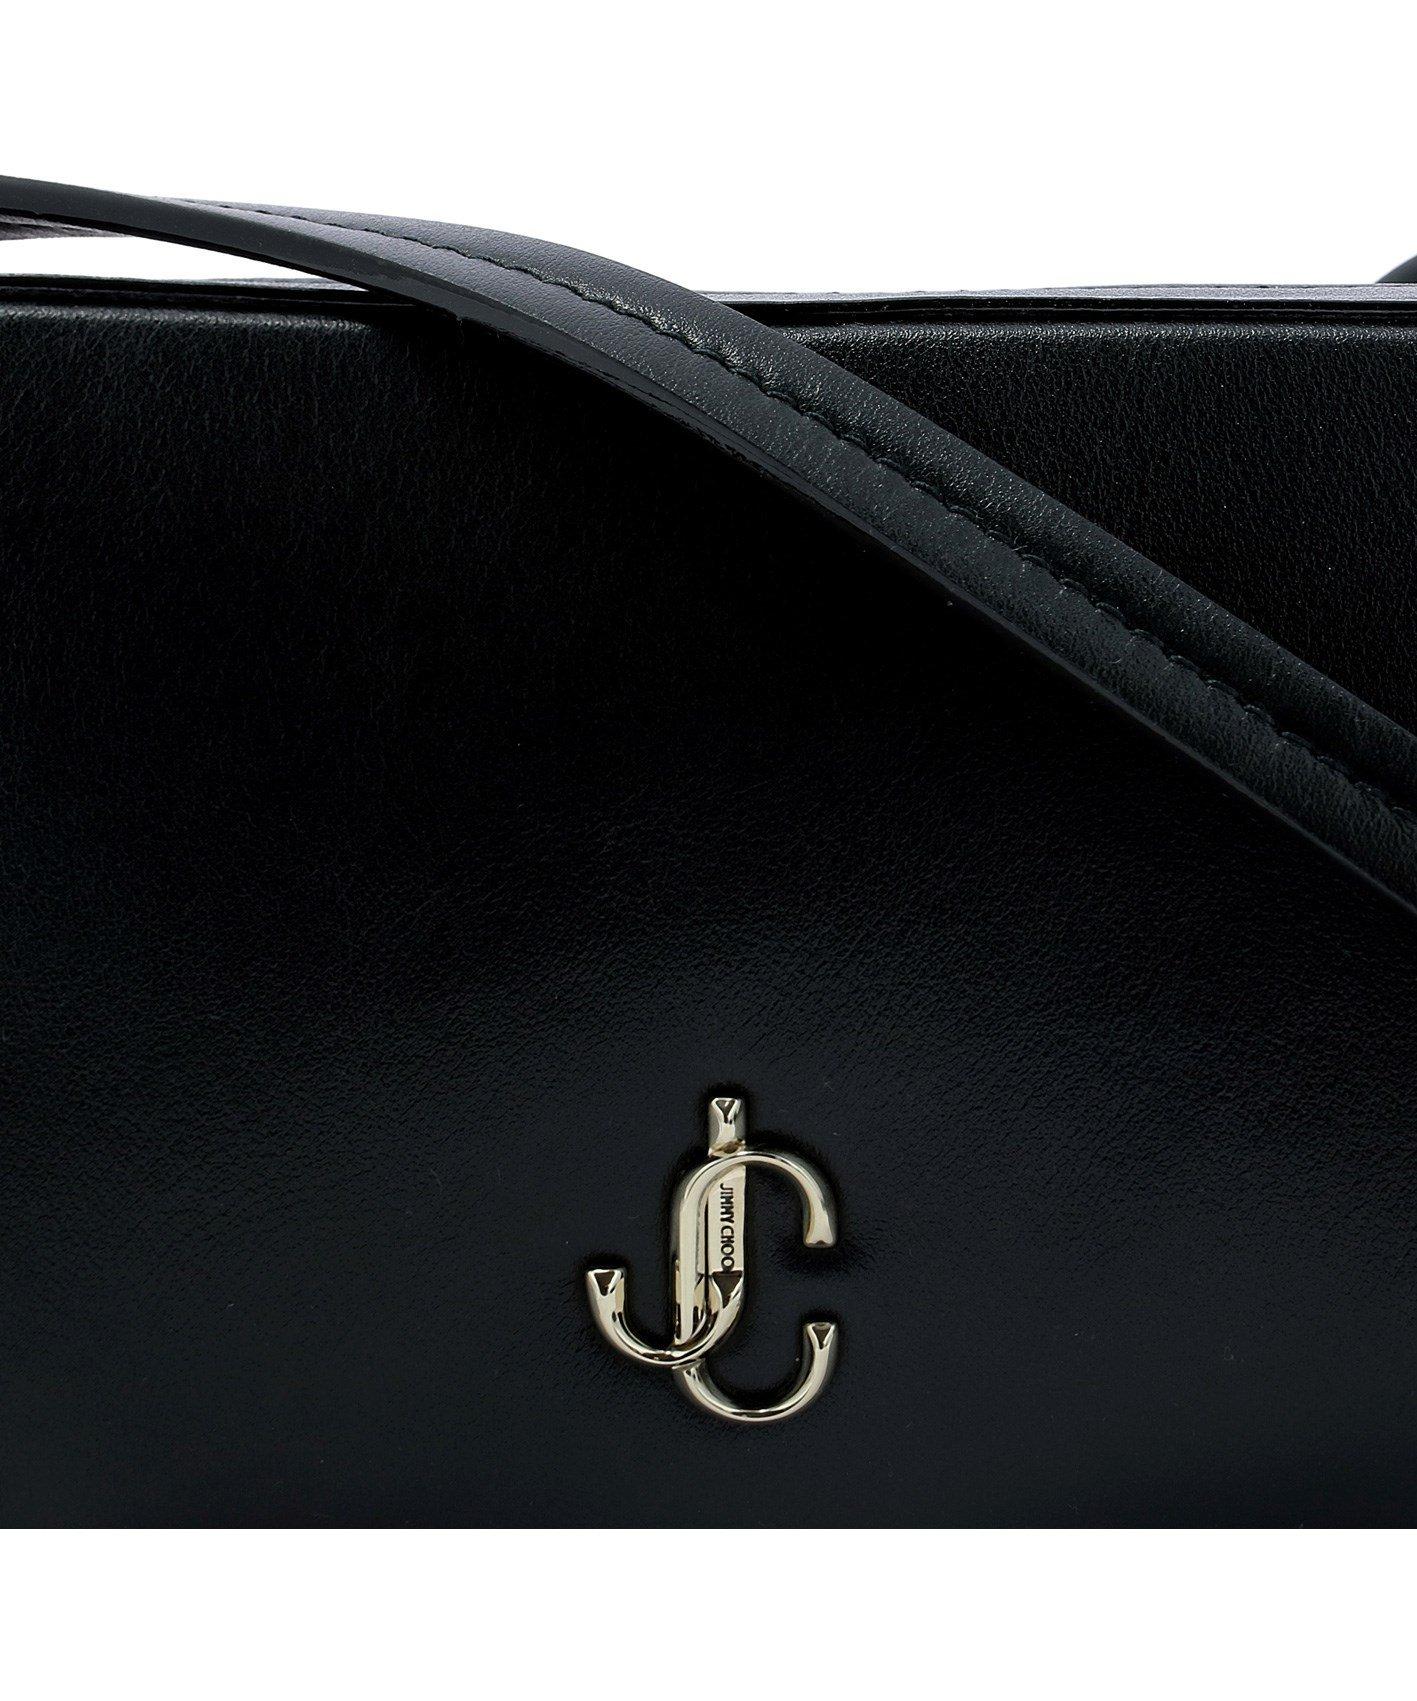 Jimmy Choo Leather Hale Camera Bag in Black - Lyst